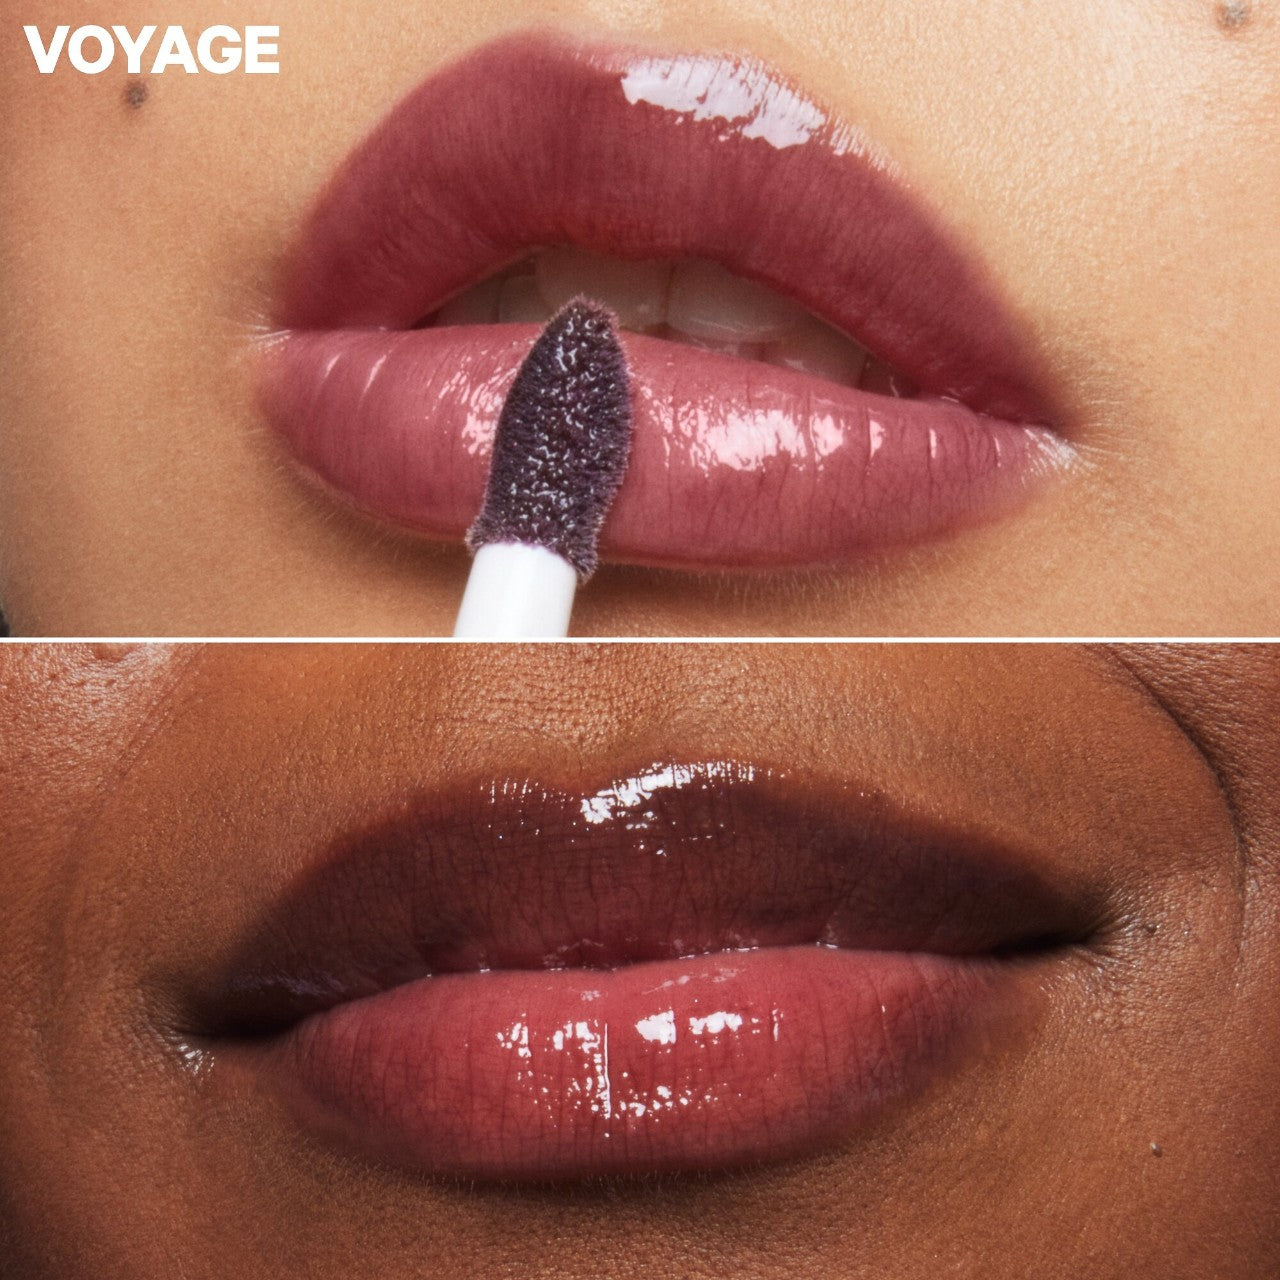 Milk Makeup Odyssey Lip Oil Gloss | Voyage